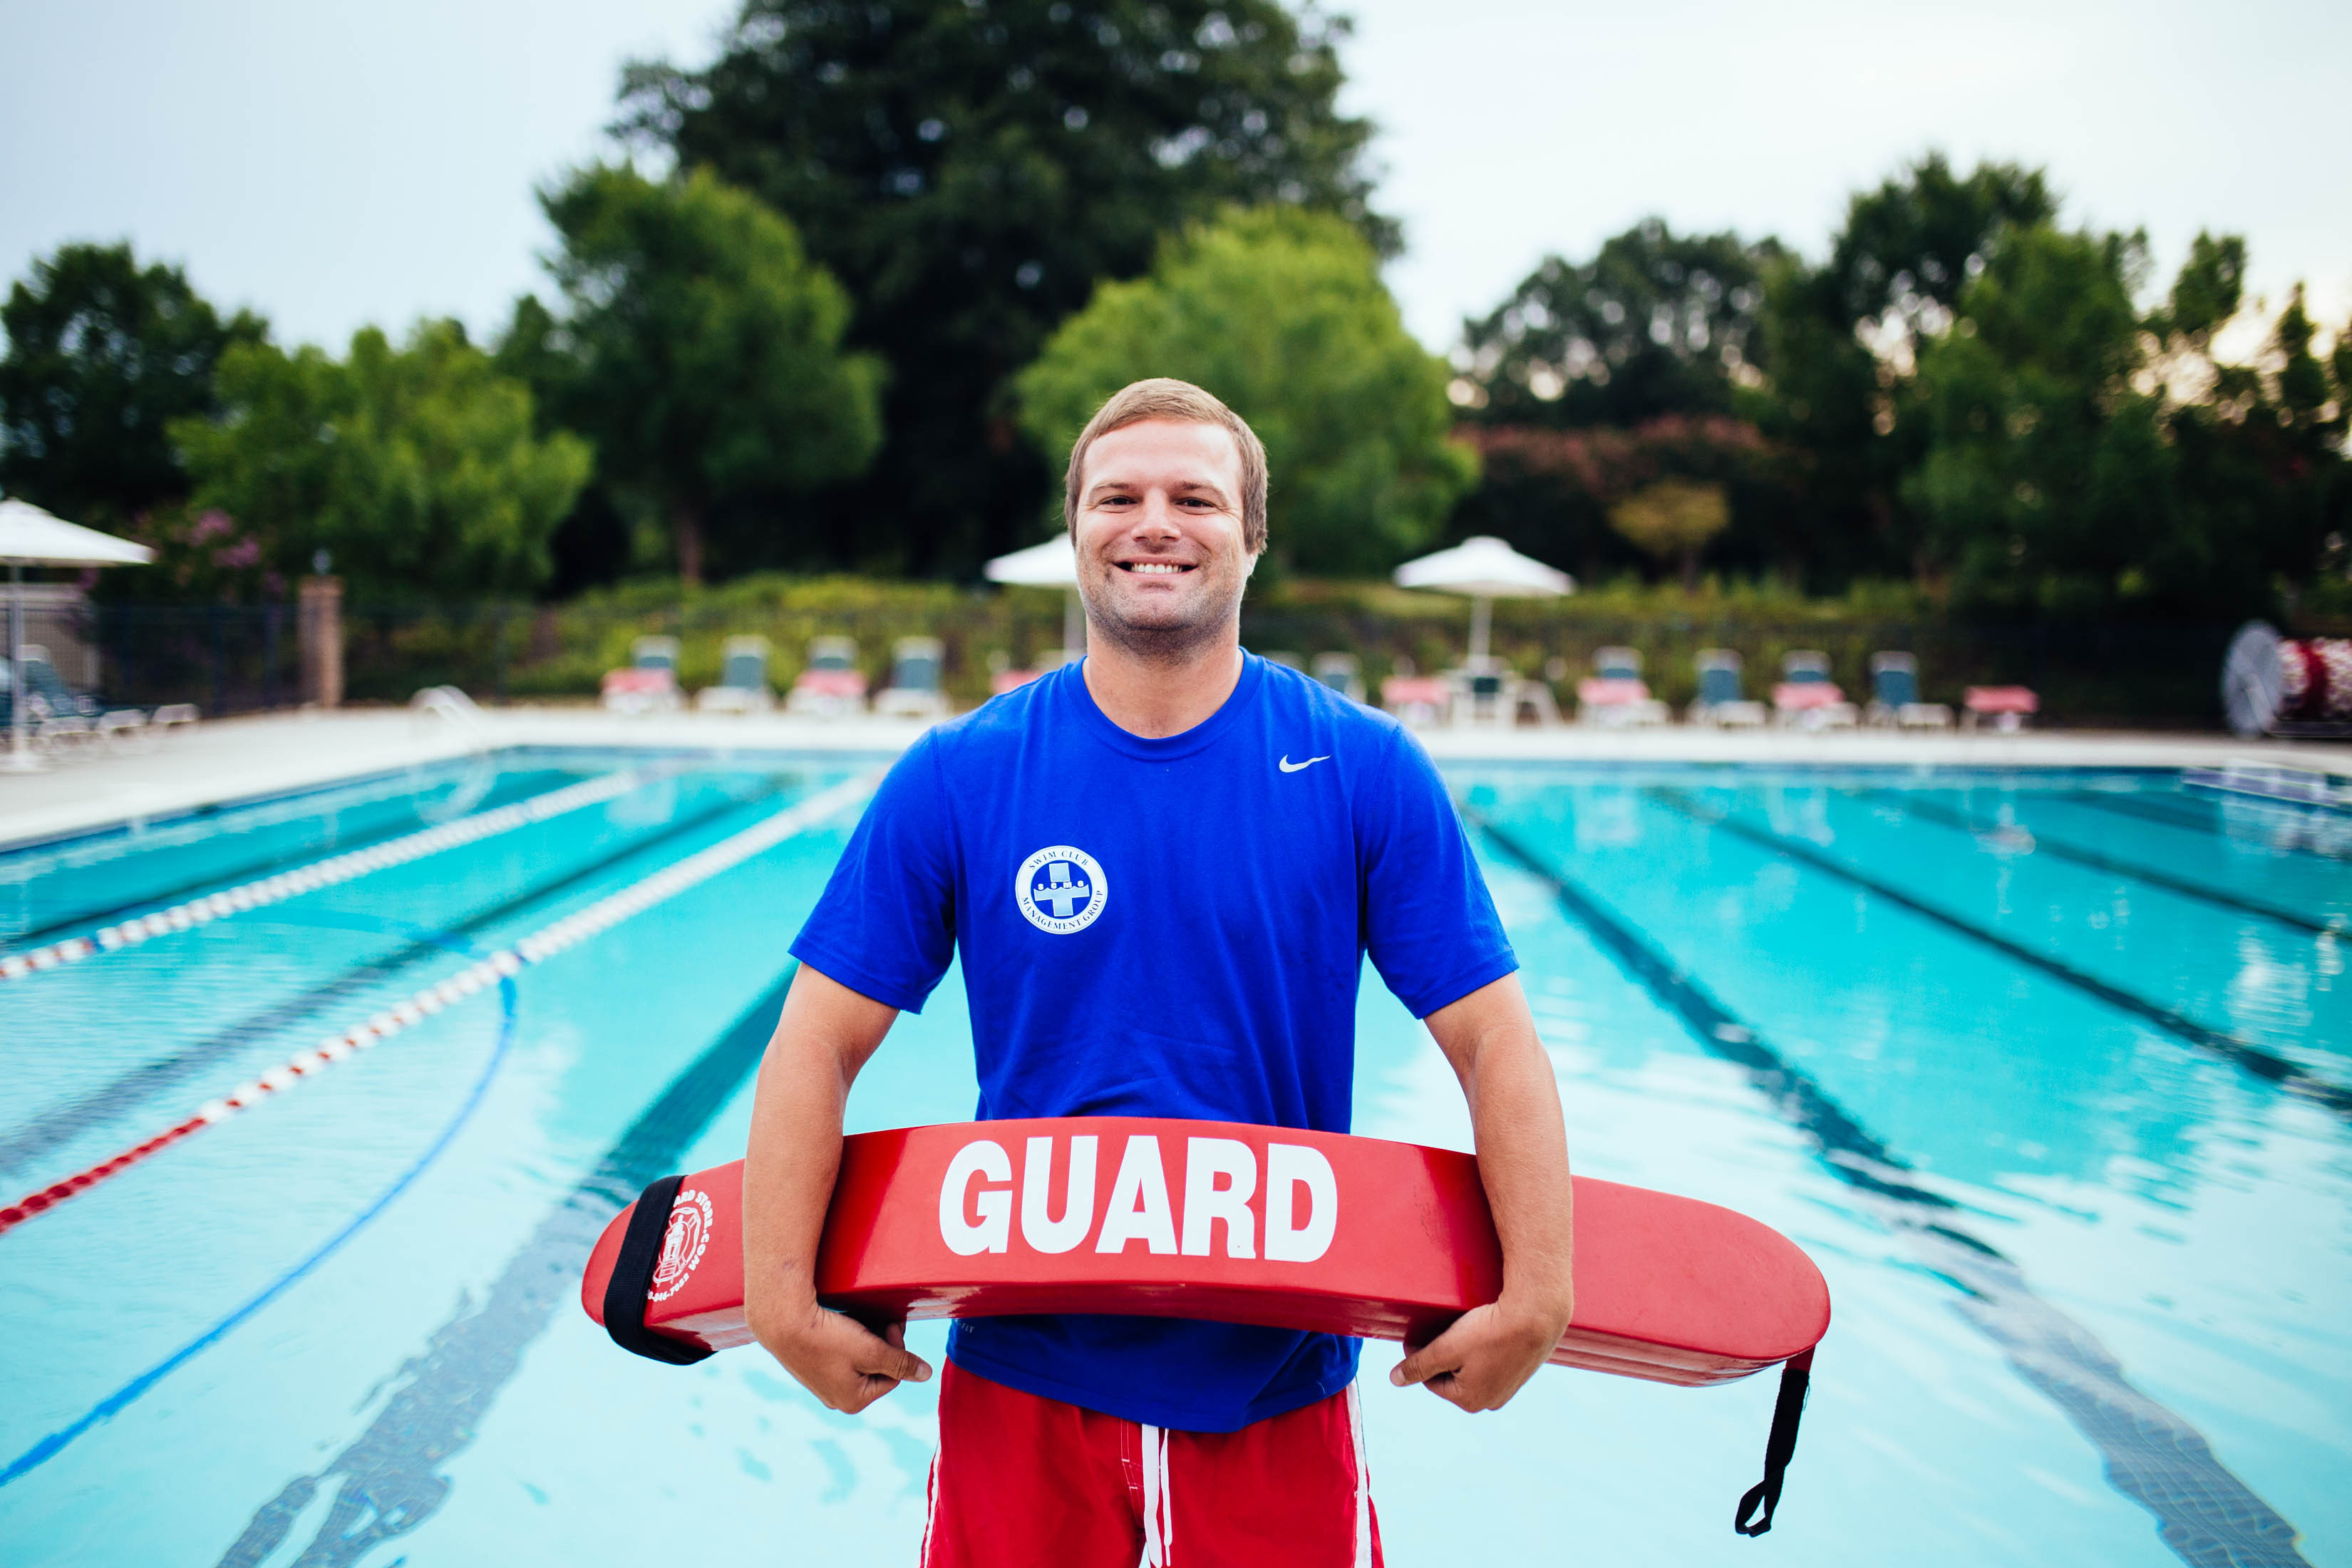 Head Lifeguard Positions Available Lifeguard Asheville